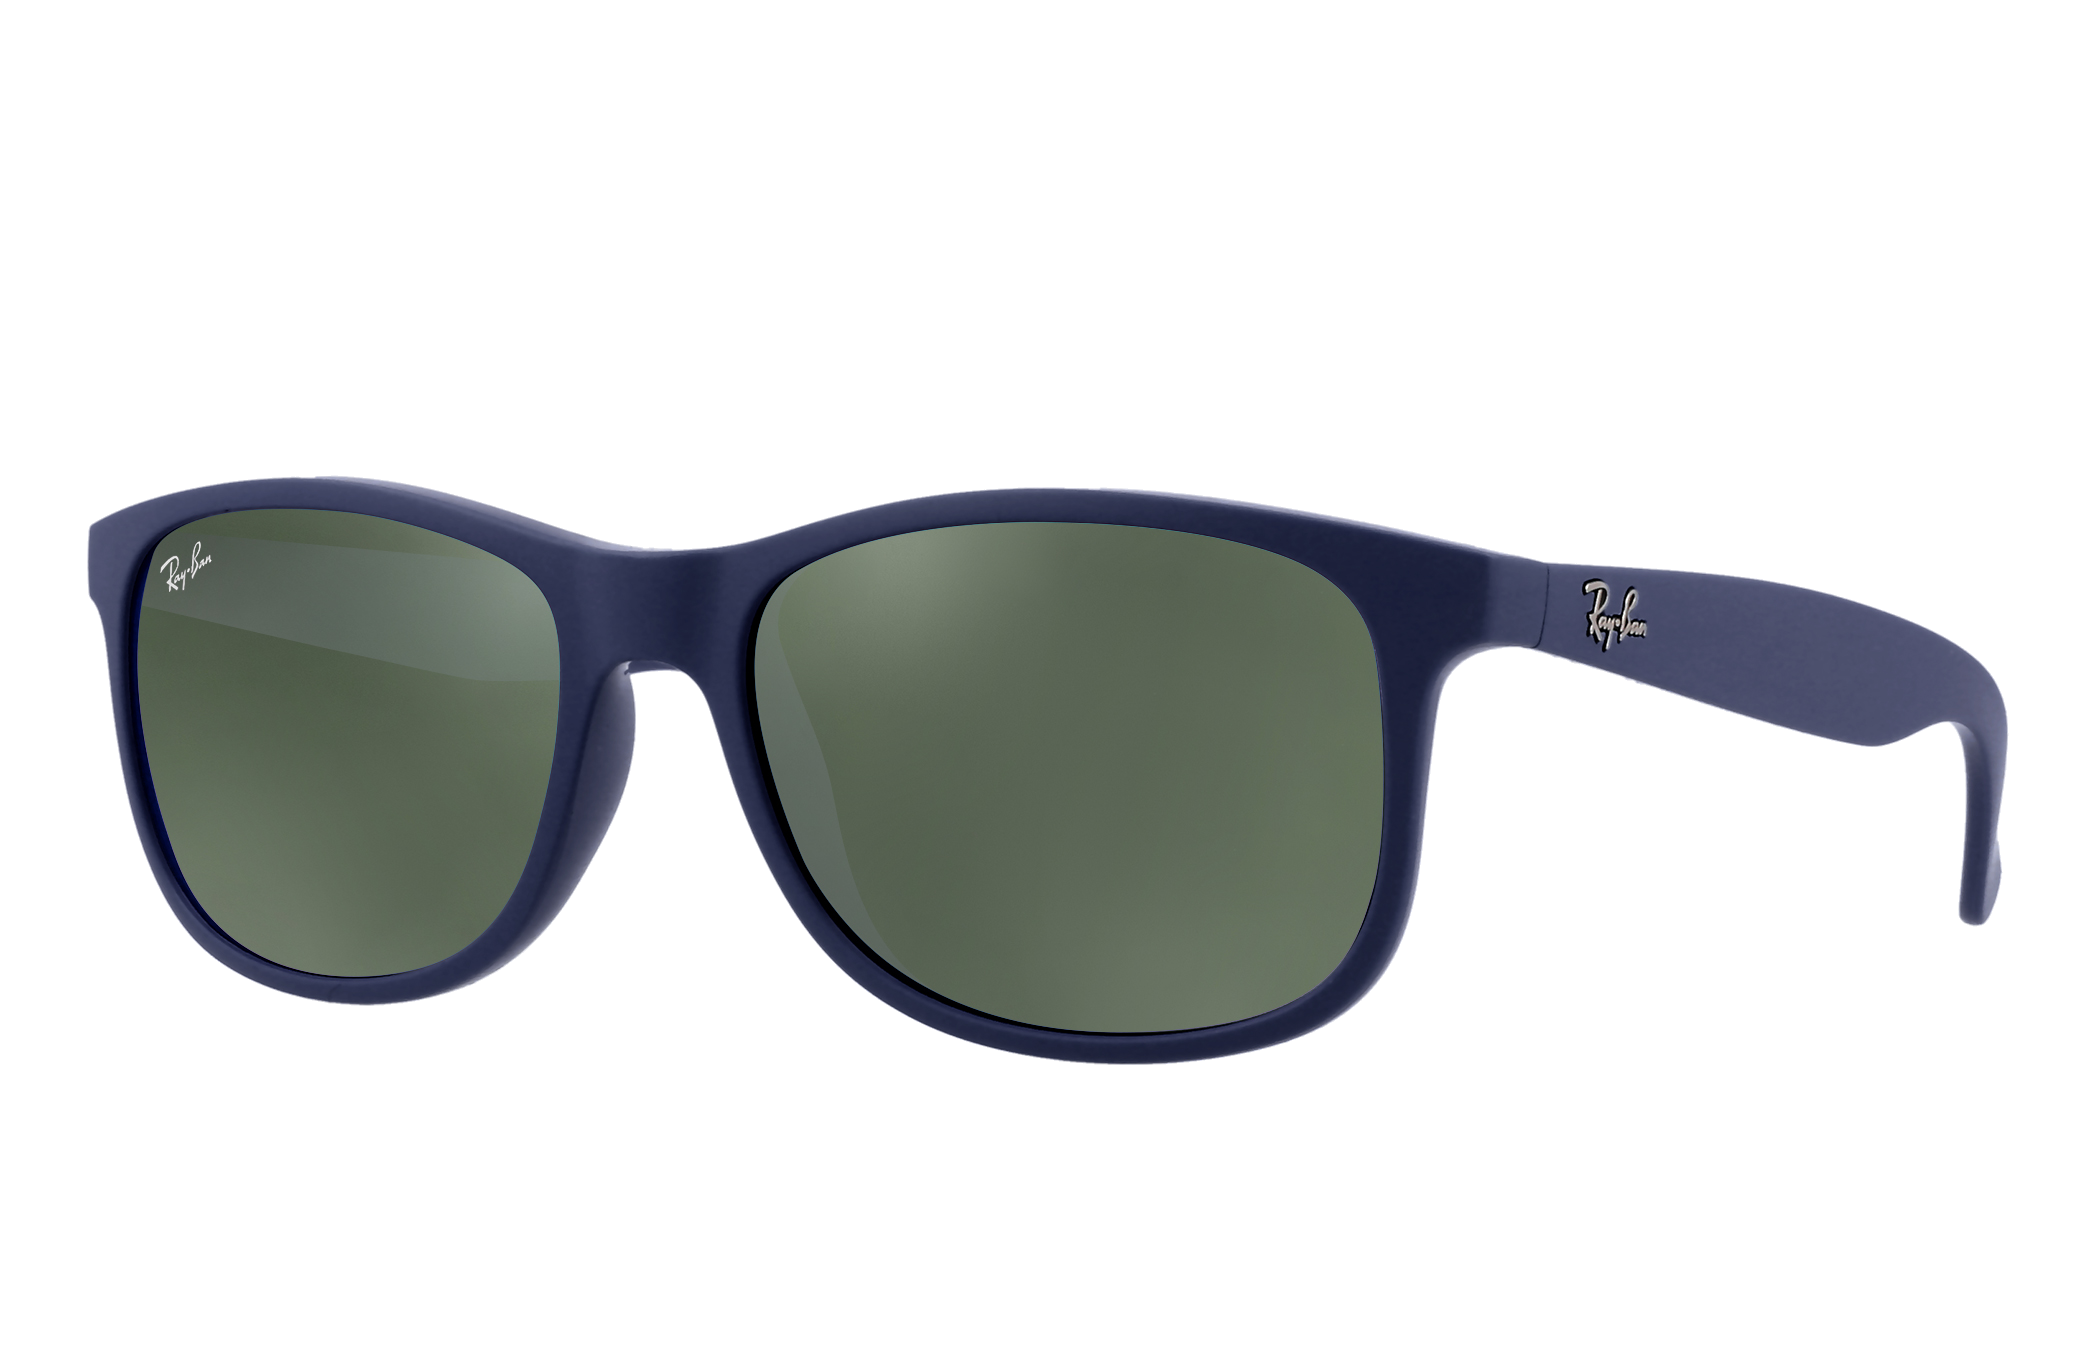 ray ban sunglasses with prescription lenses uk